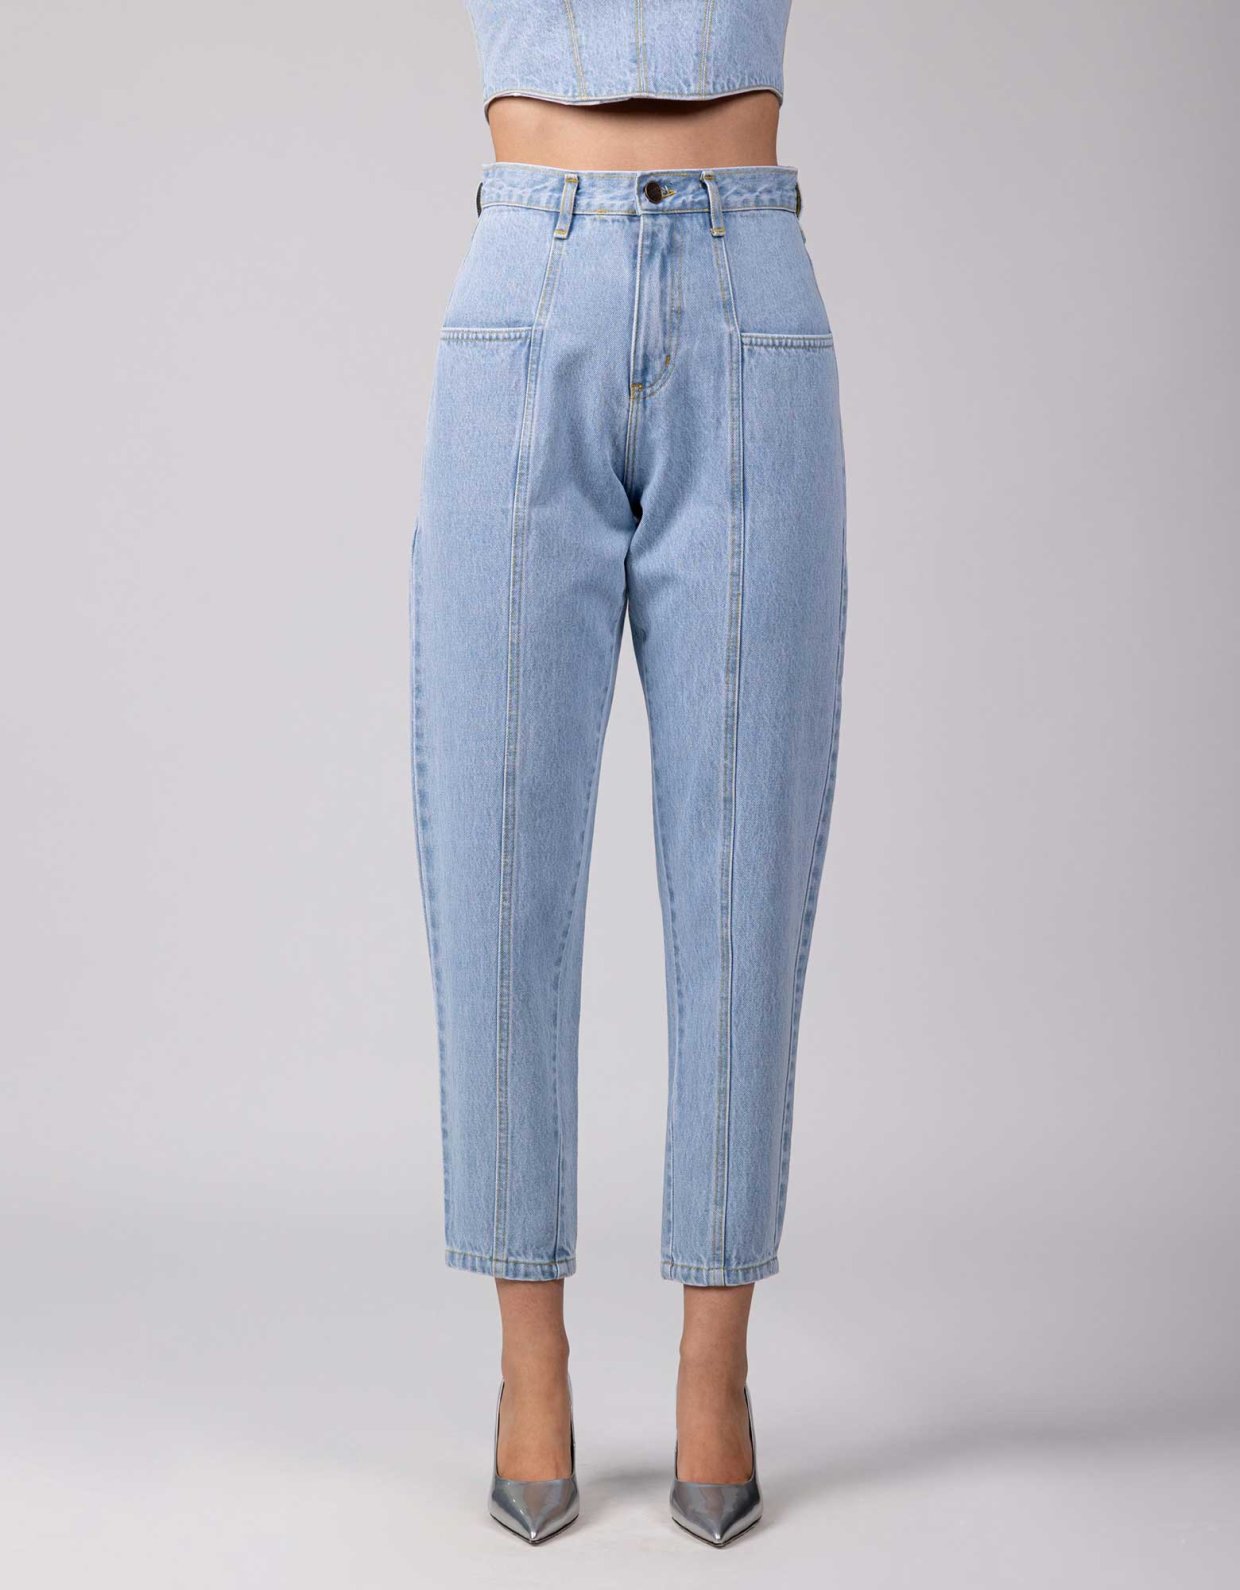 Sac & CO Jeans Diana slim fit light blue denim